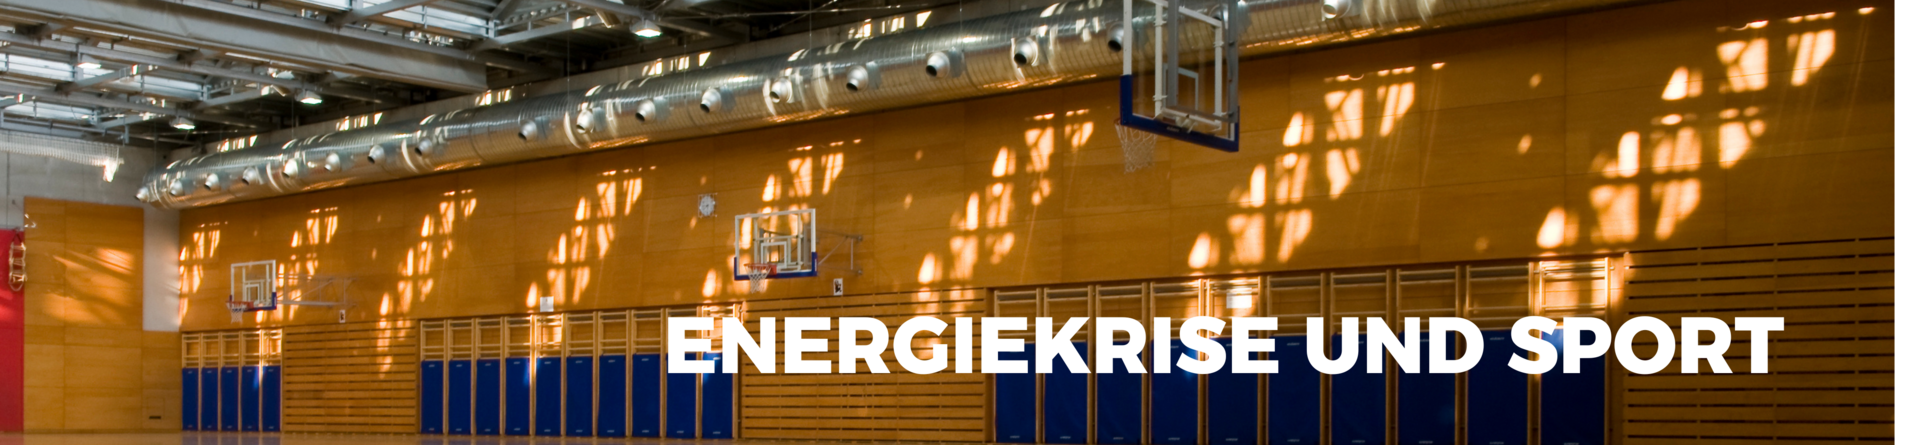 Energiekrise_und_Sport__2_